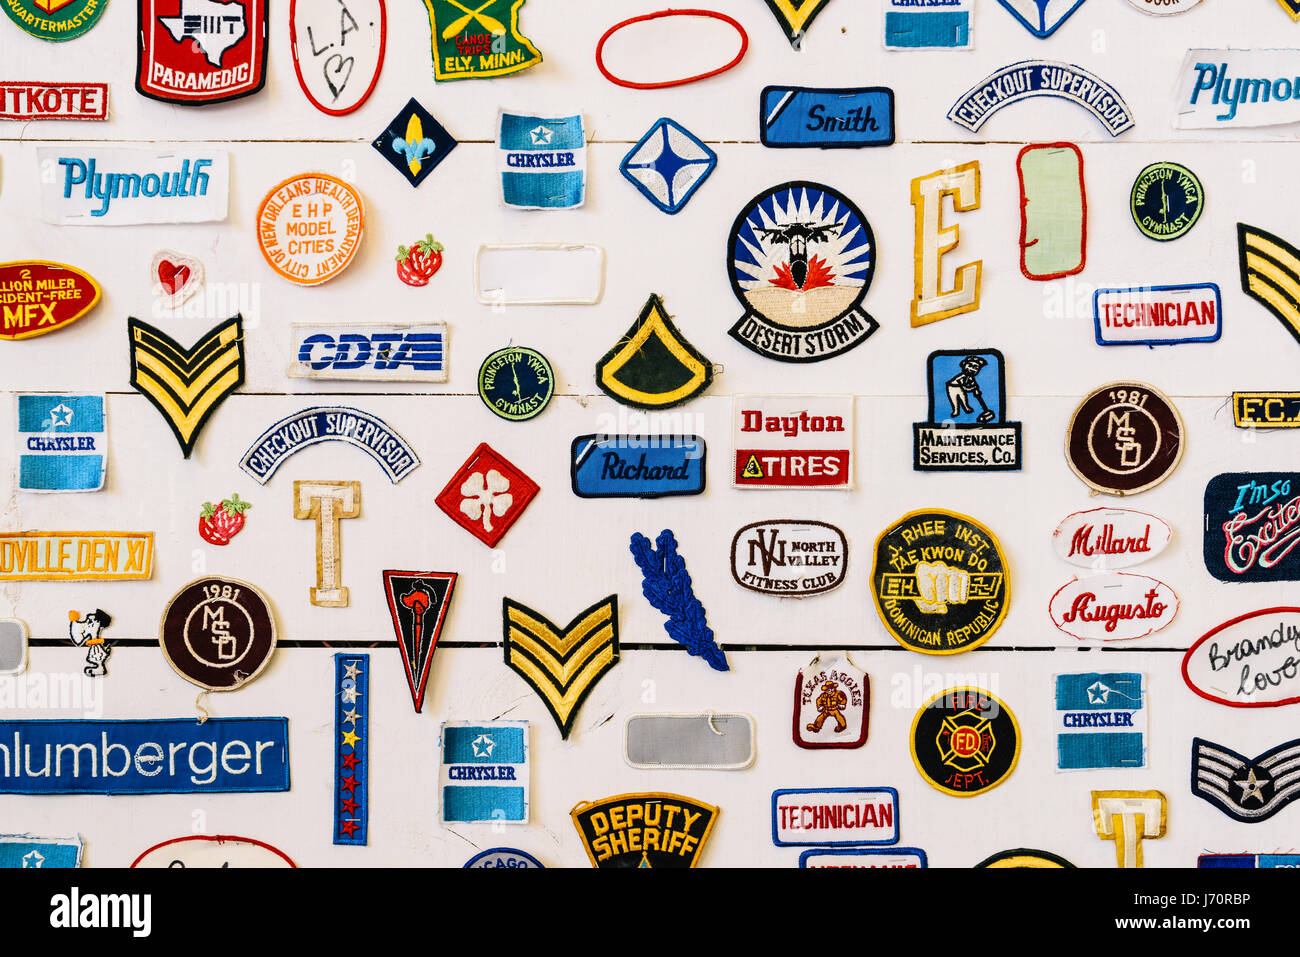 famous trademarks logos